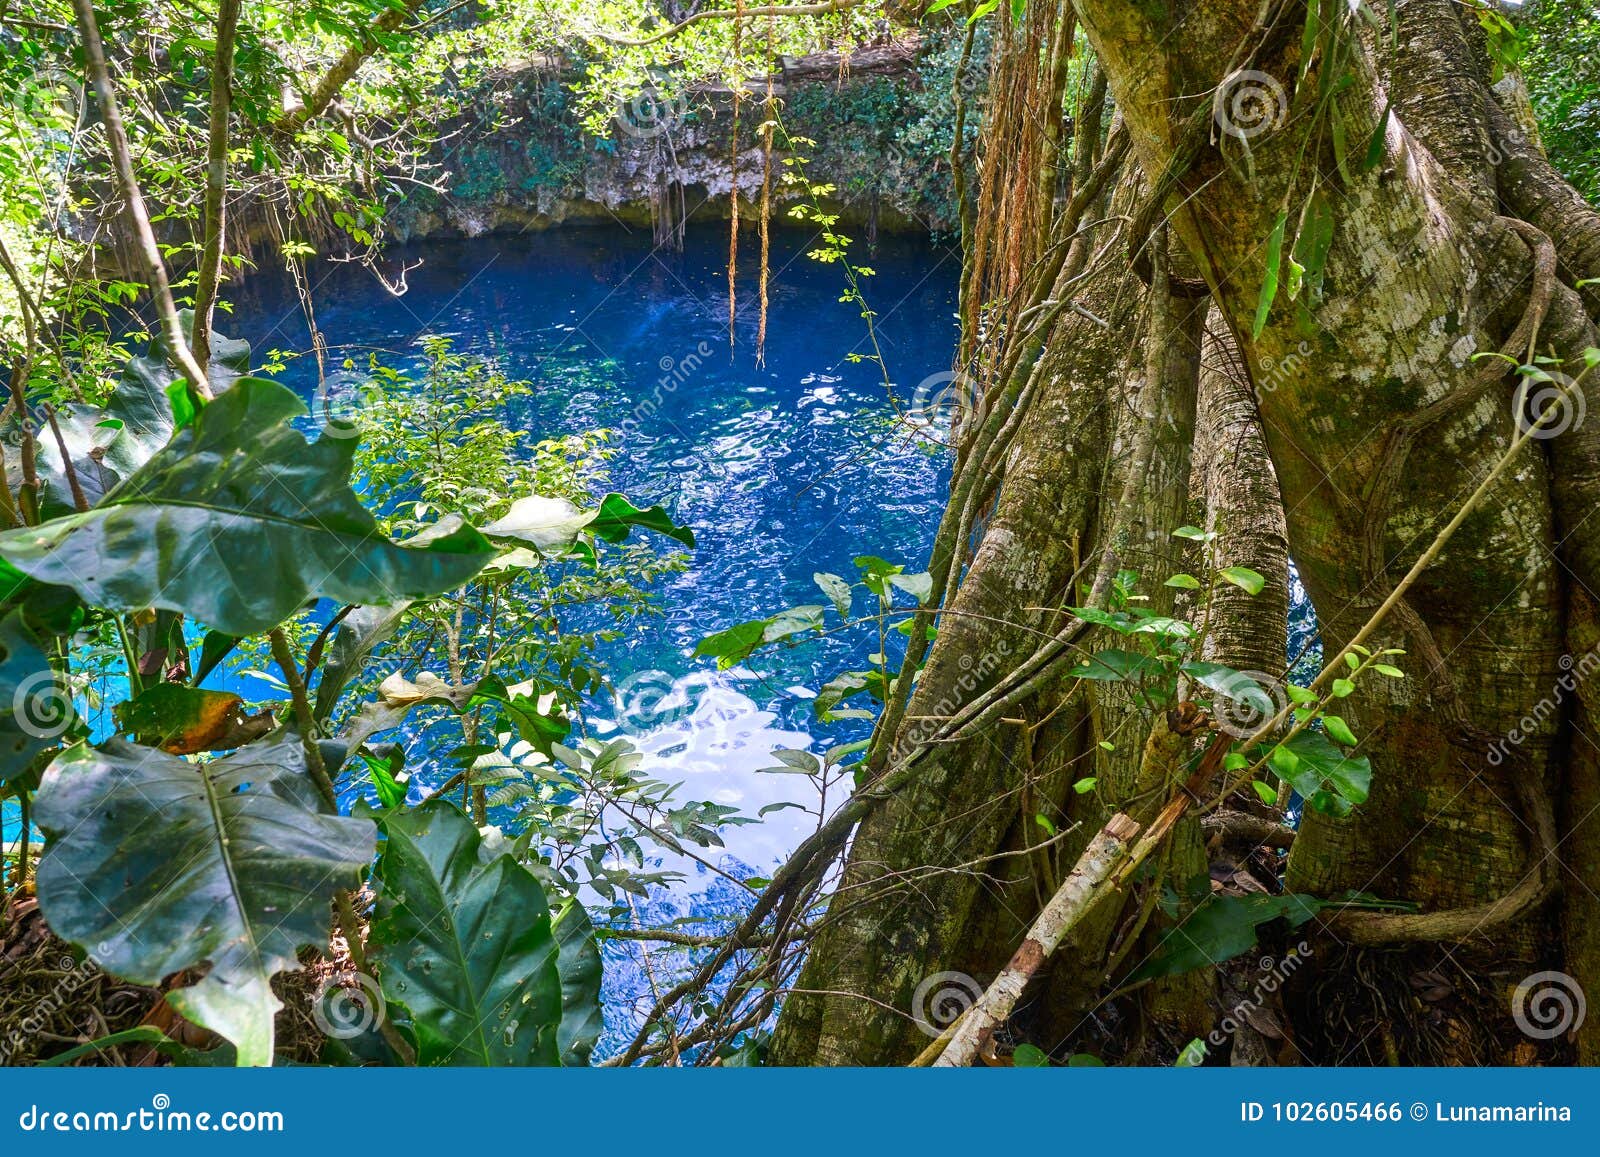 Cenote Sinkhole In Rainforest Mayan Jungle Stock Photo